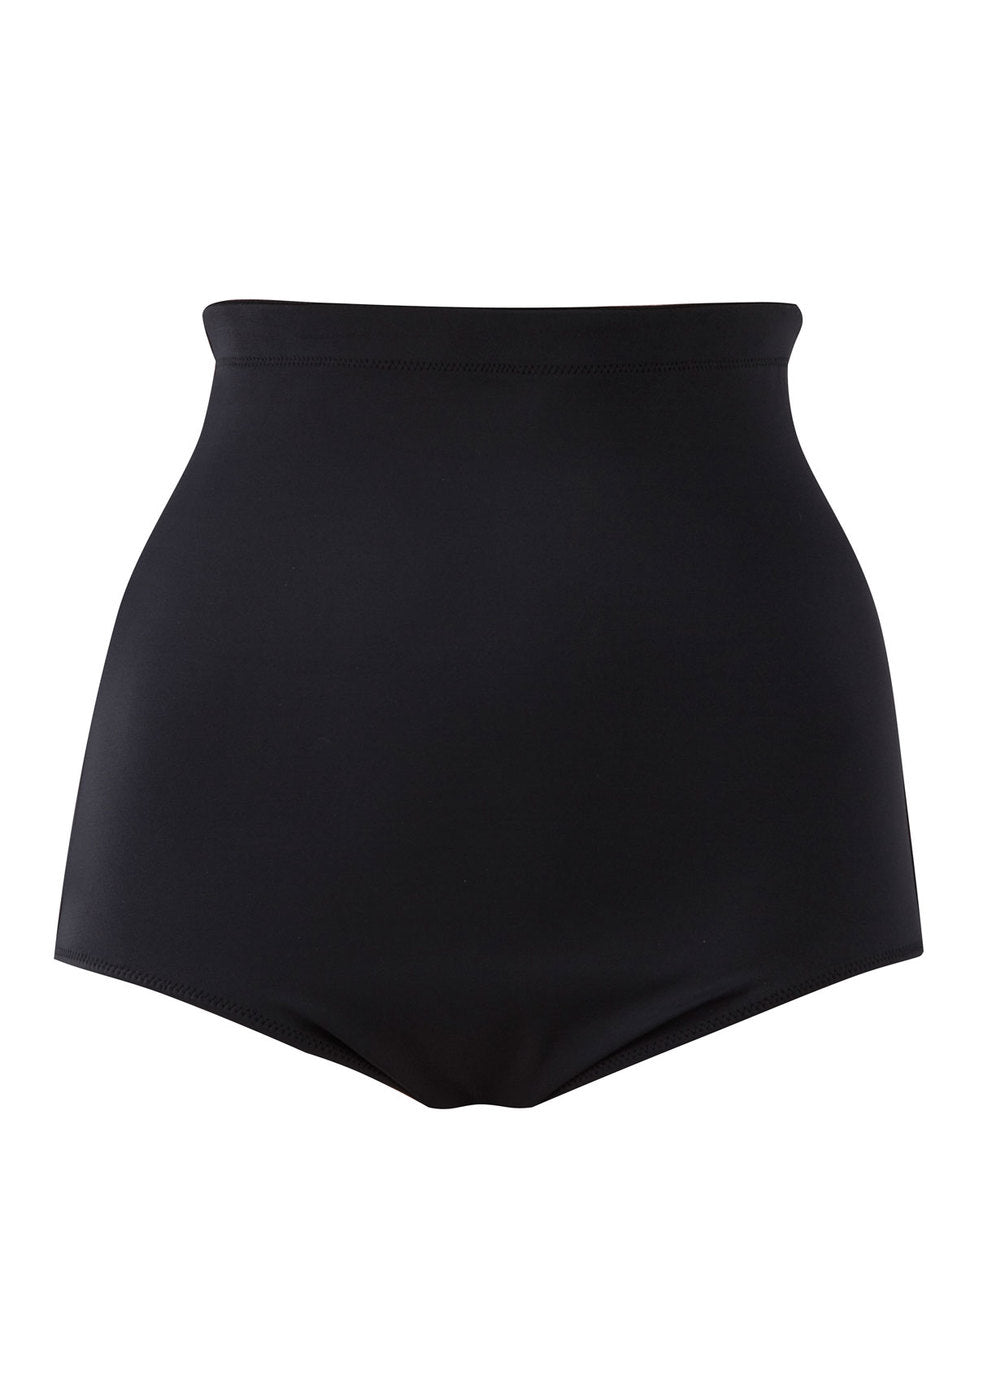 Elomi Swim Essentials Black High Waist Bikini Brief